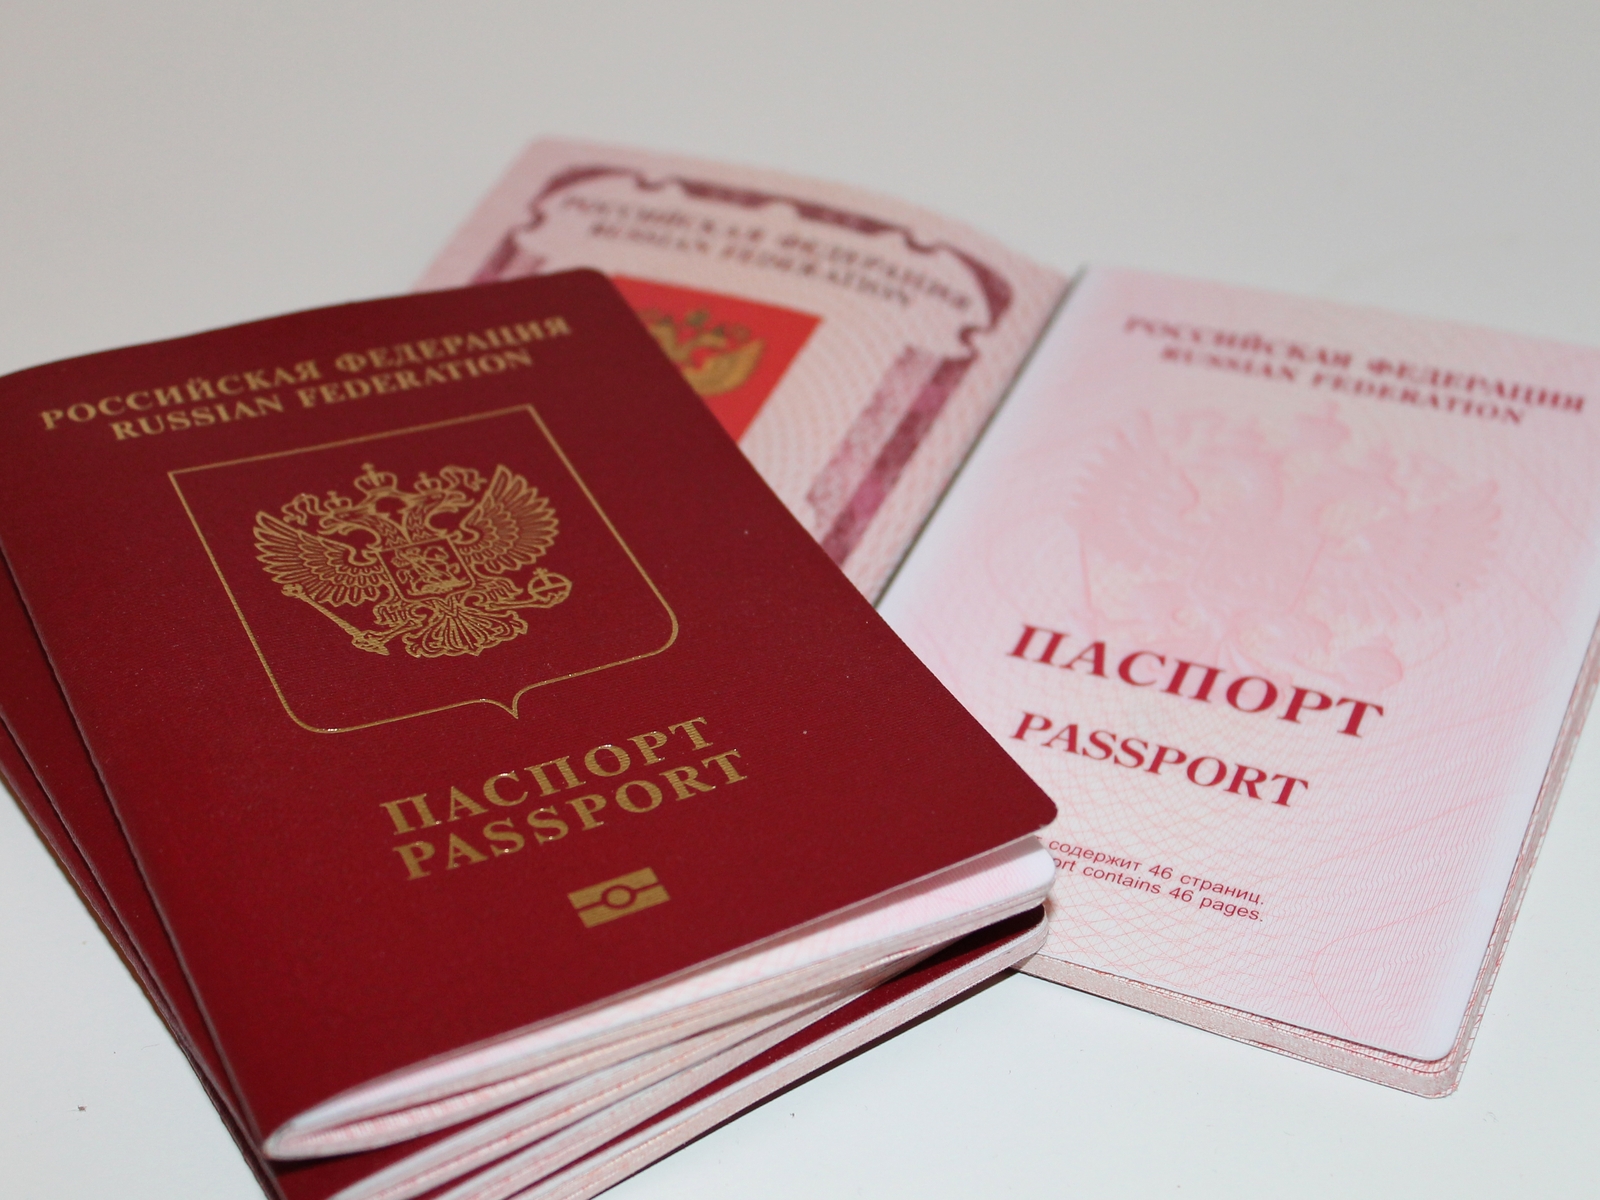 pasaport rusesc; sursa foto: economica.net